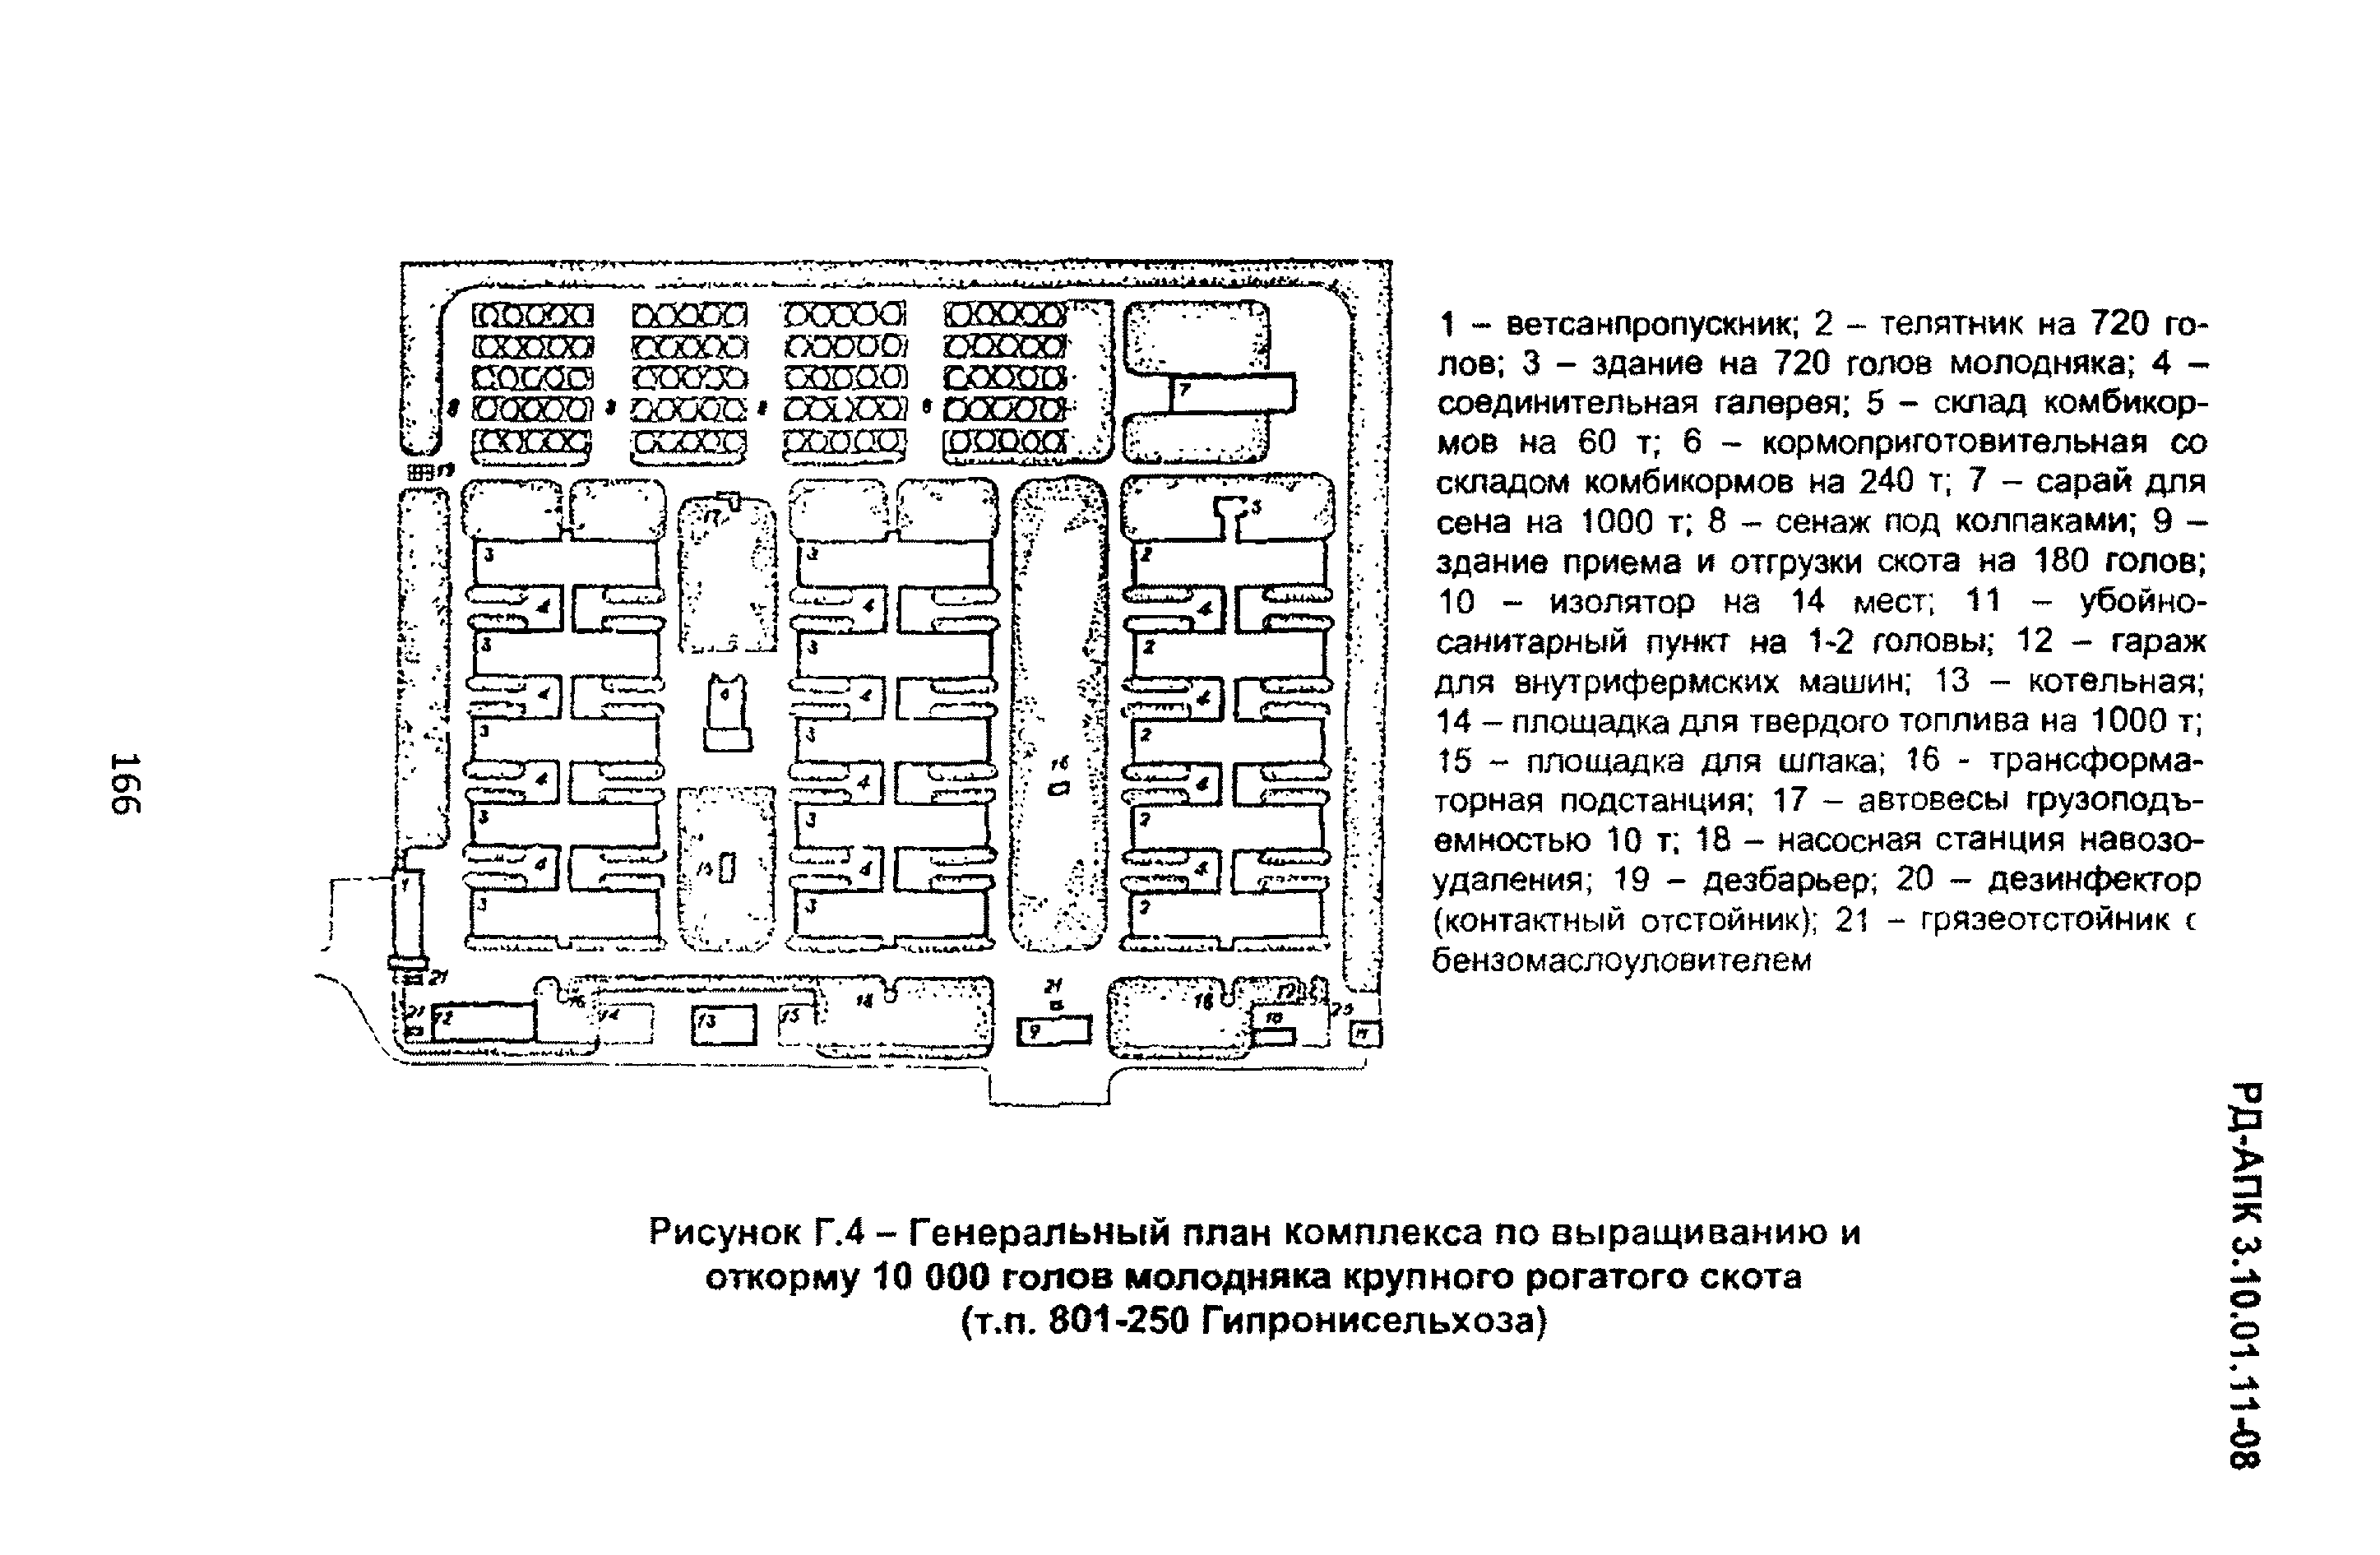 РД-АПК 3.10.01.11-08